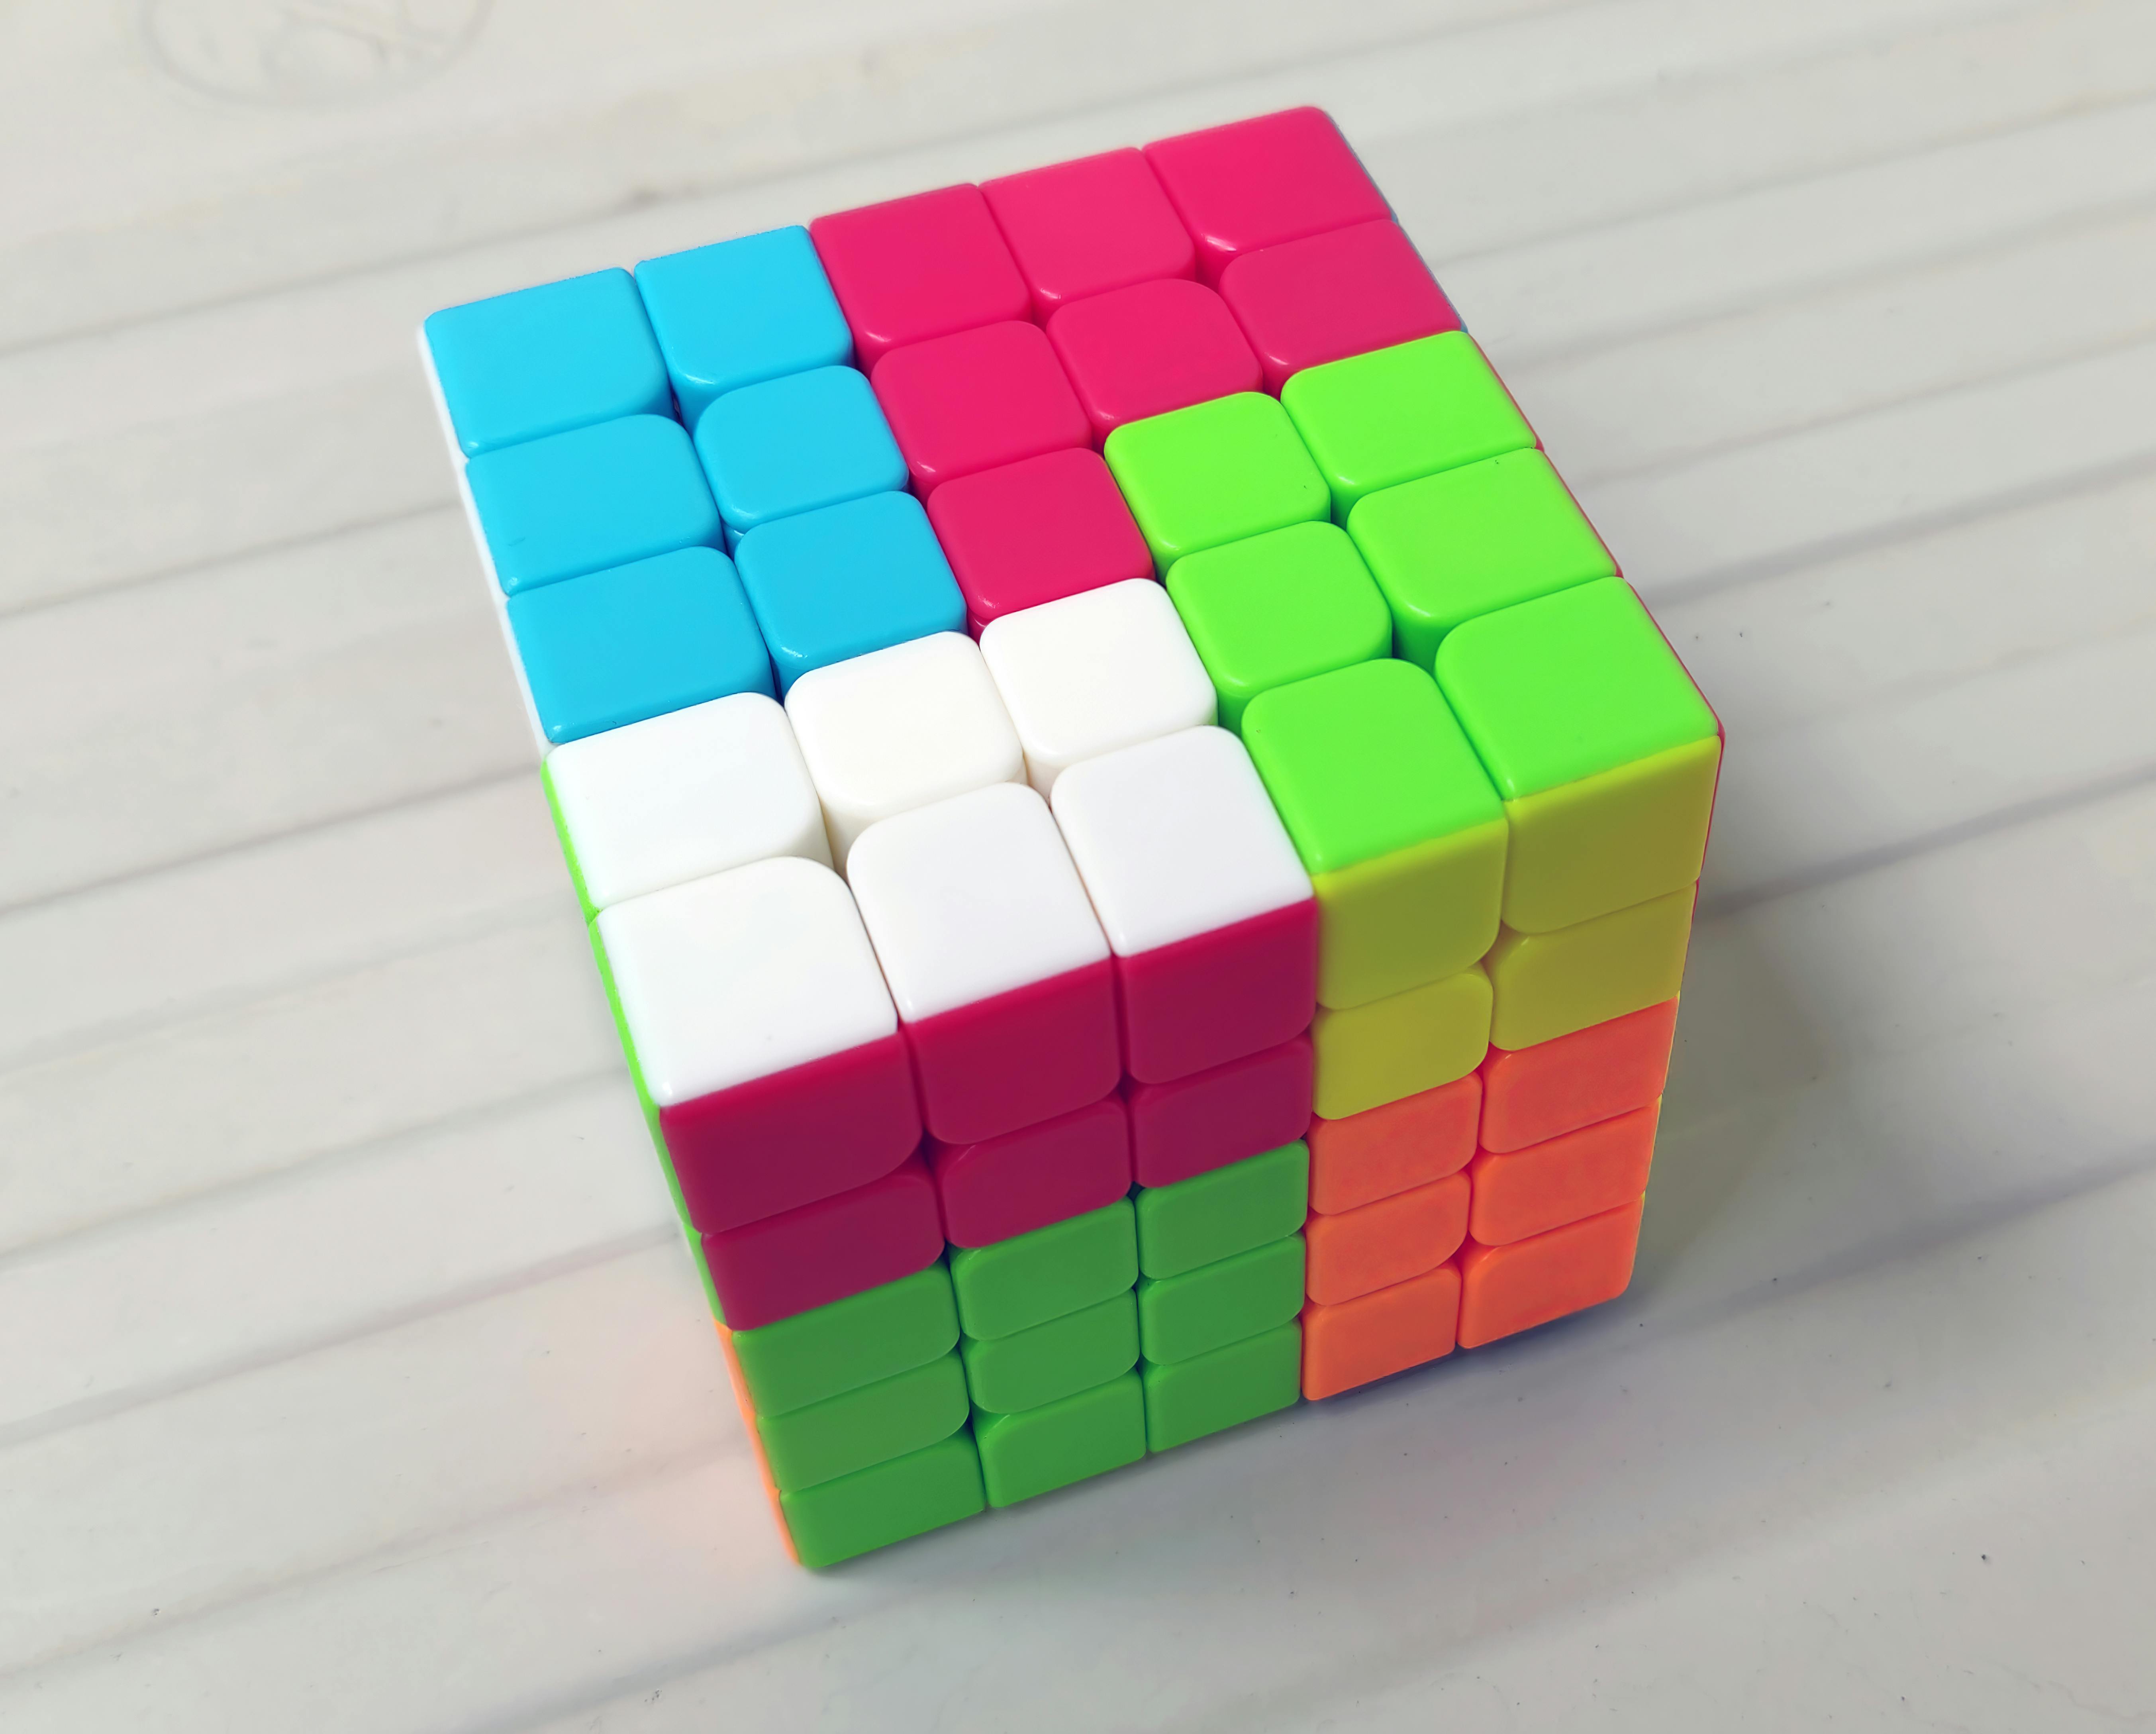 3 X 3 Magic Cube · Free Stock Photo